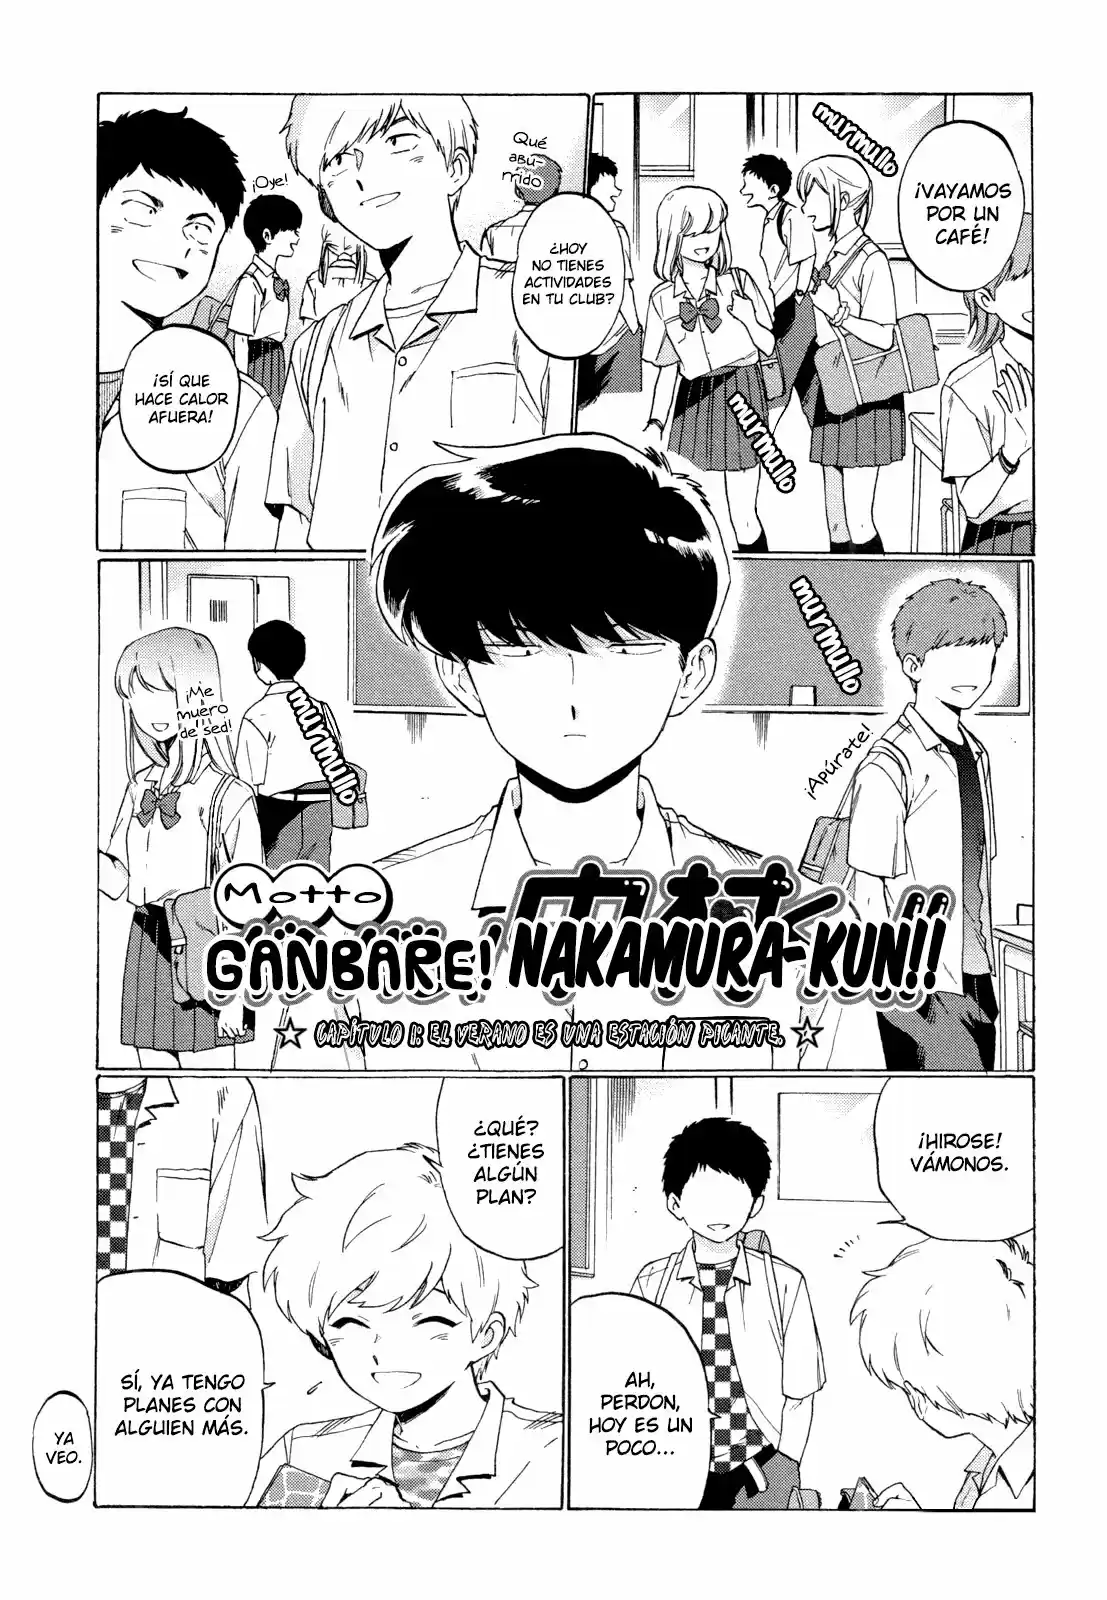 Ganbare! Nakamura-kun!! Capítulo 1.00 - Mangamovil